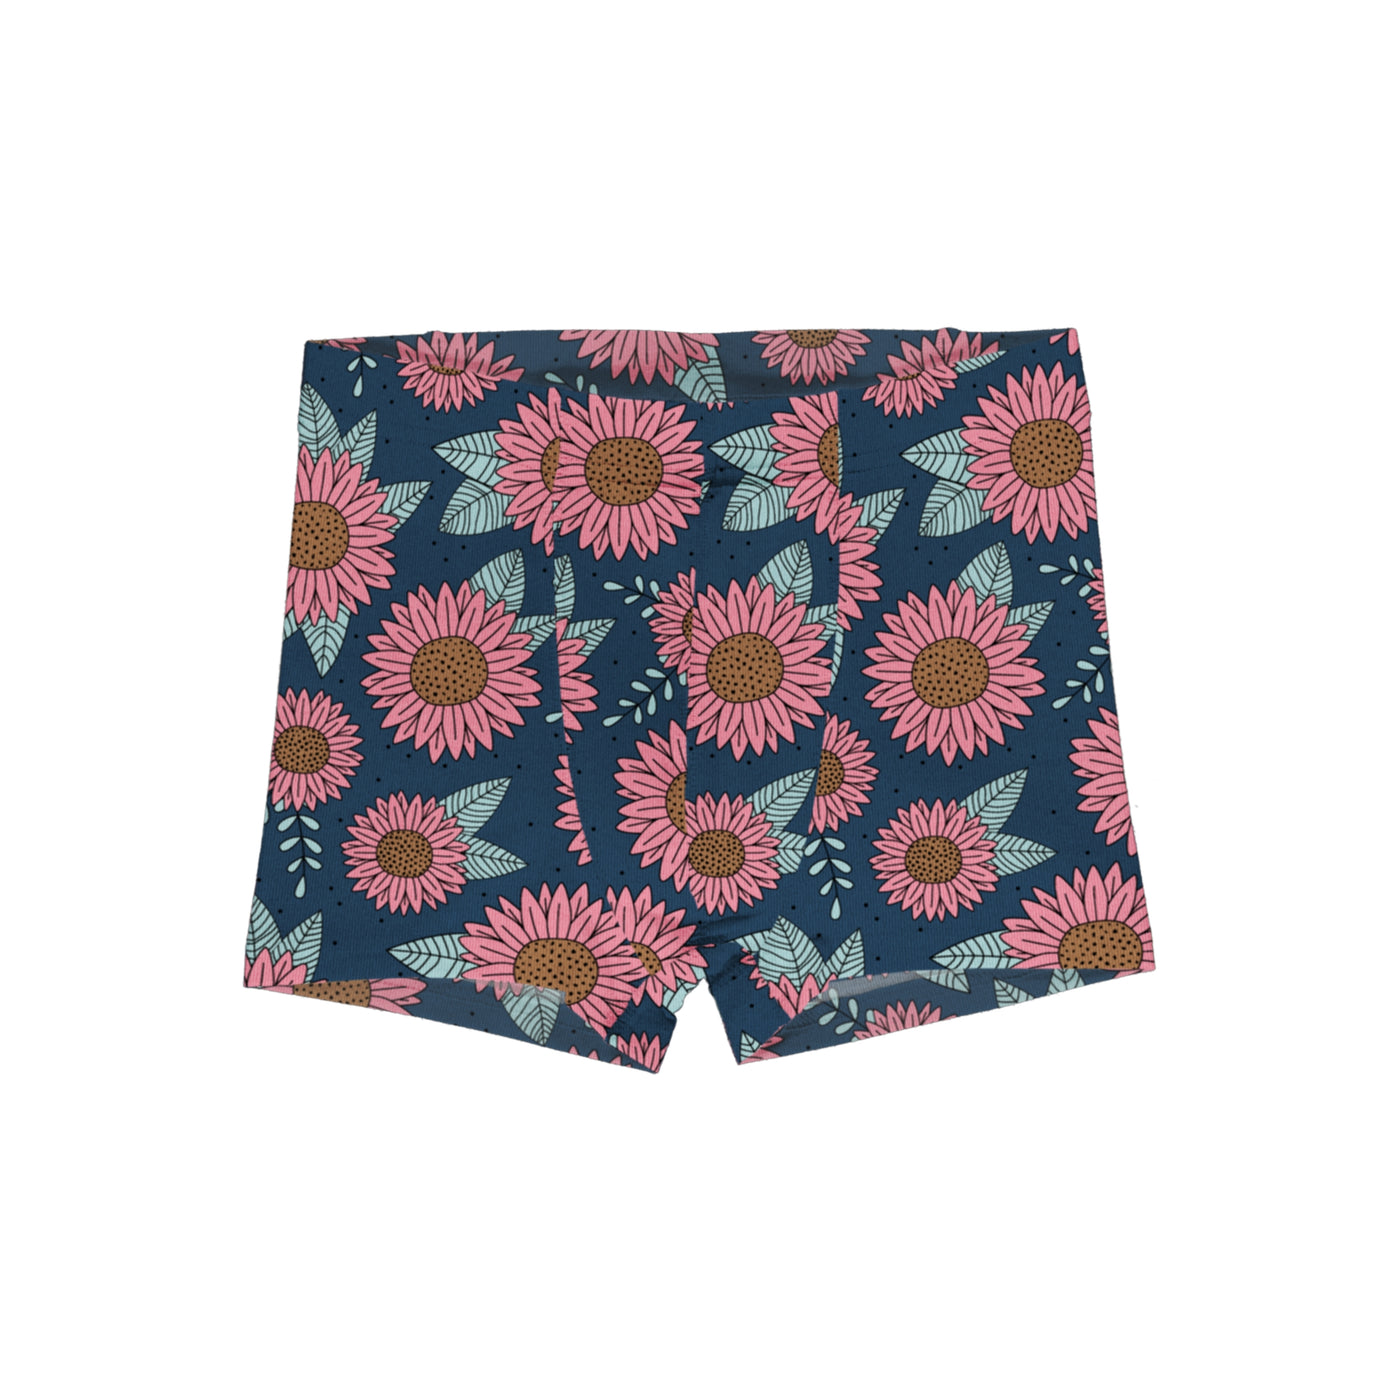 Meyadey Boxer Shorts - Sunflower Dreams